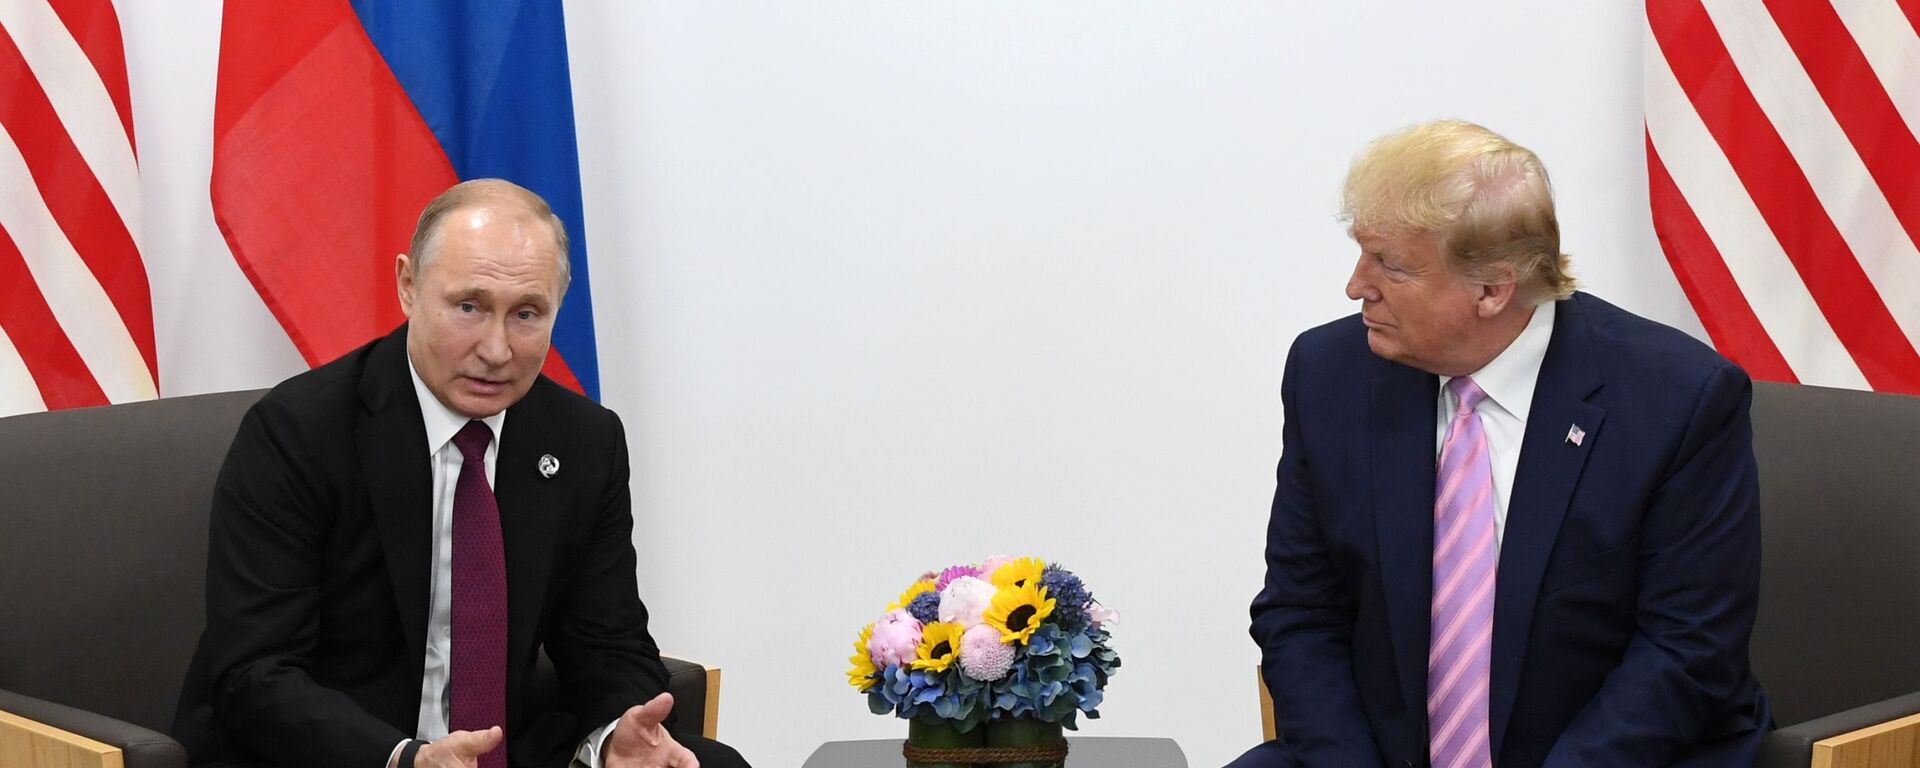 Встреча президента РФ Владимира Путина и президента США Дональда Трампа  на саммите Большая двадцатка - Sputnik Литва, 1920, 06.10.2021